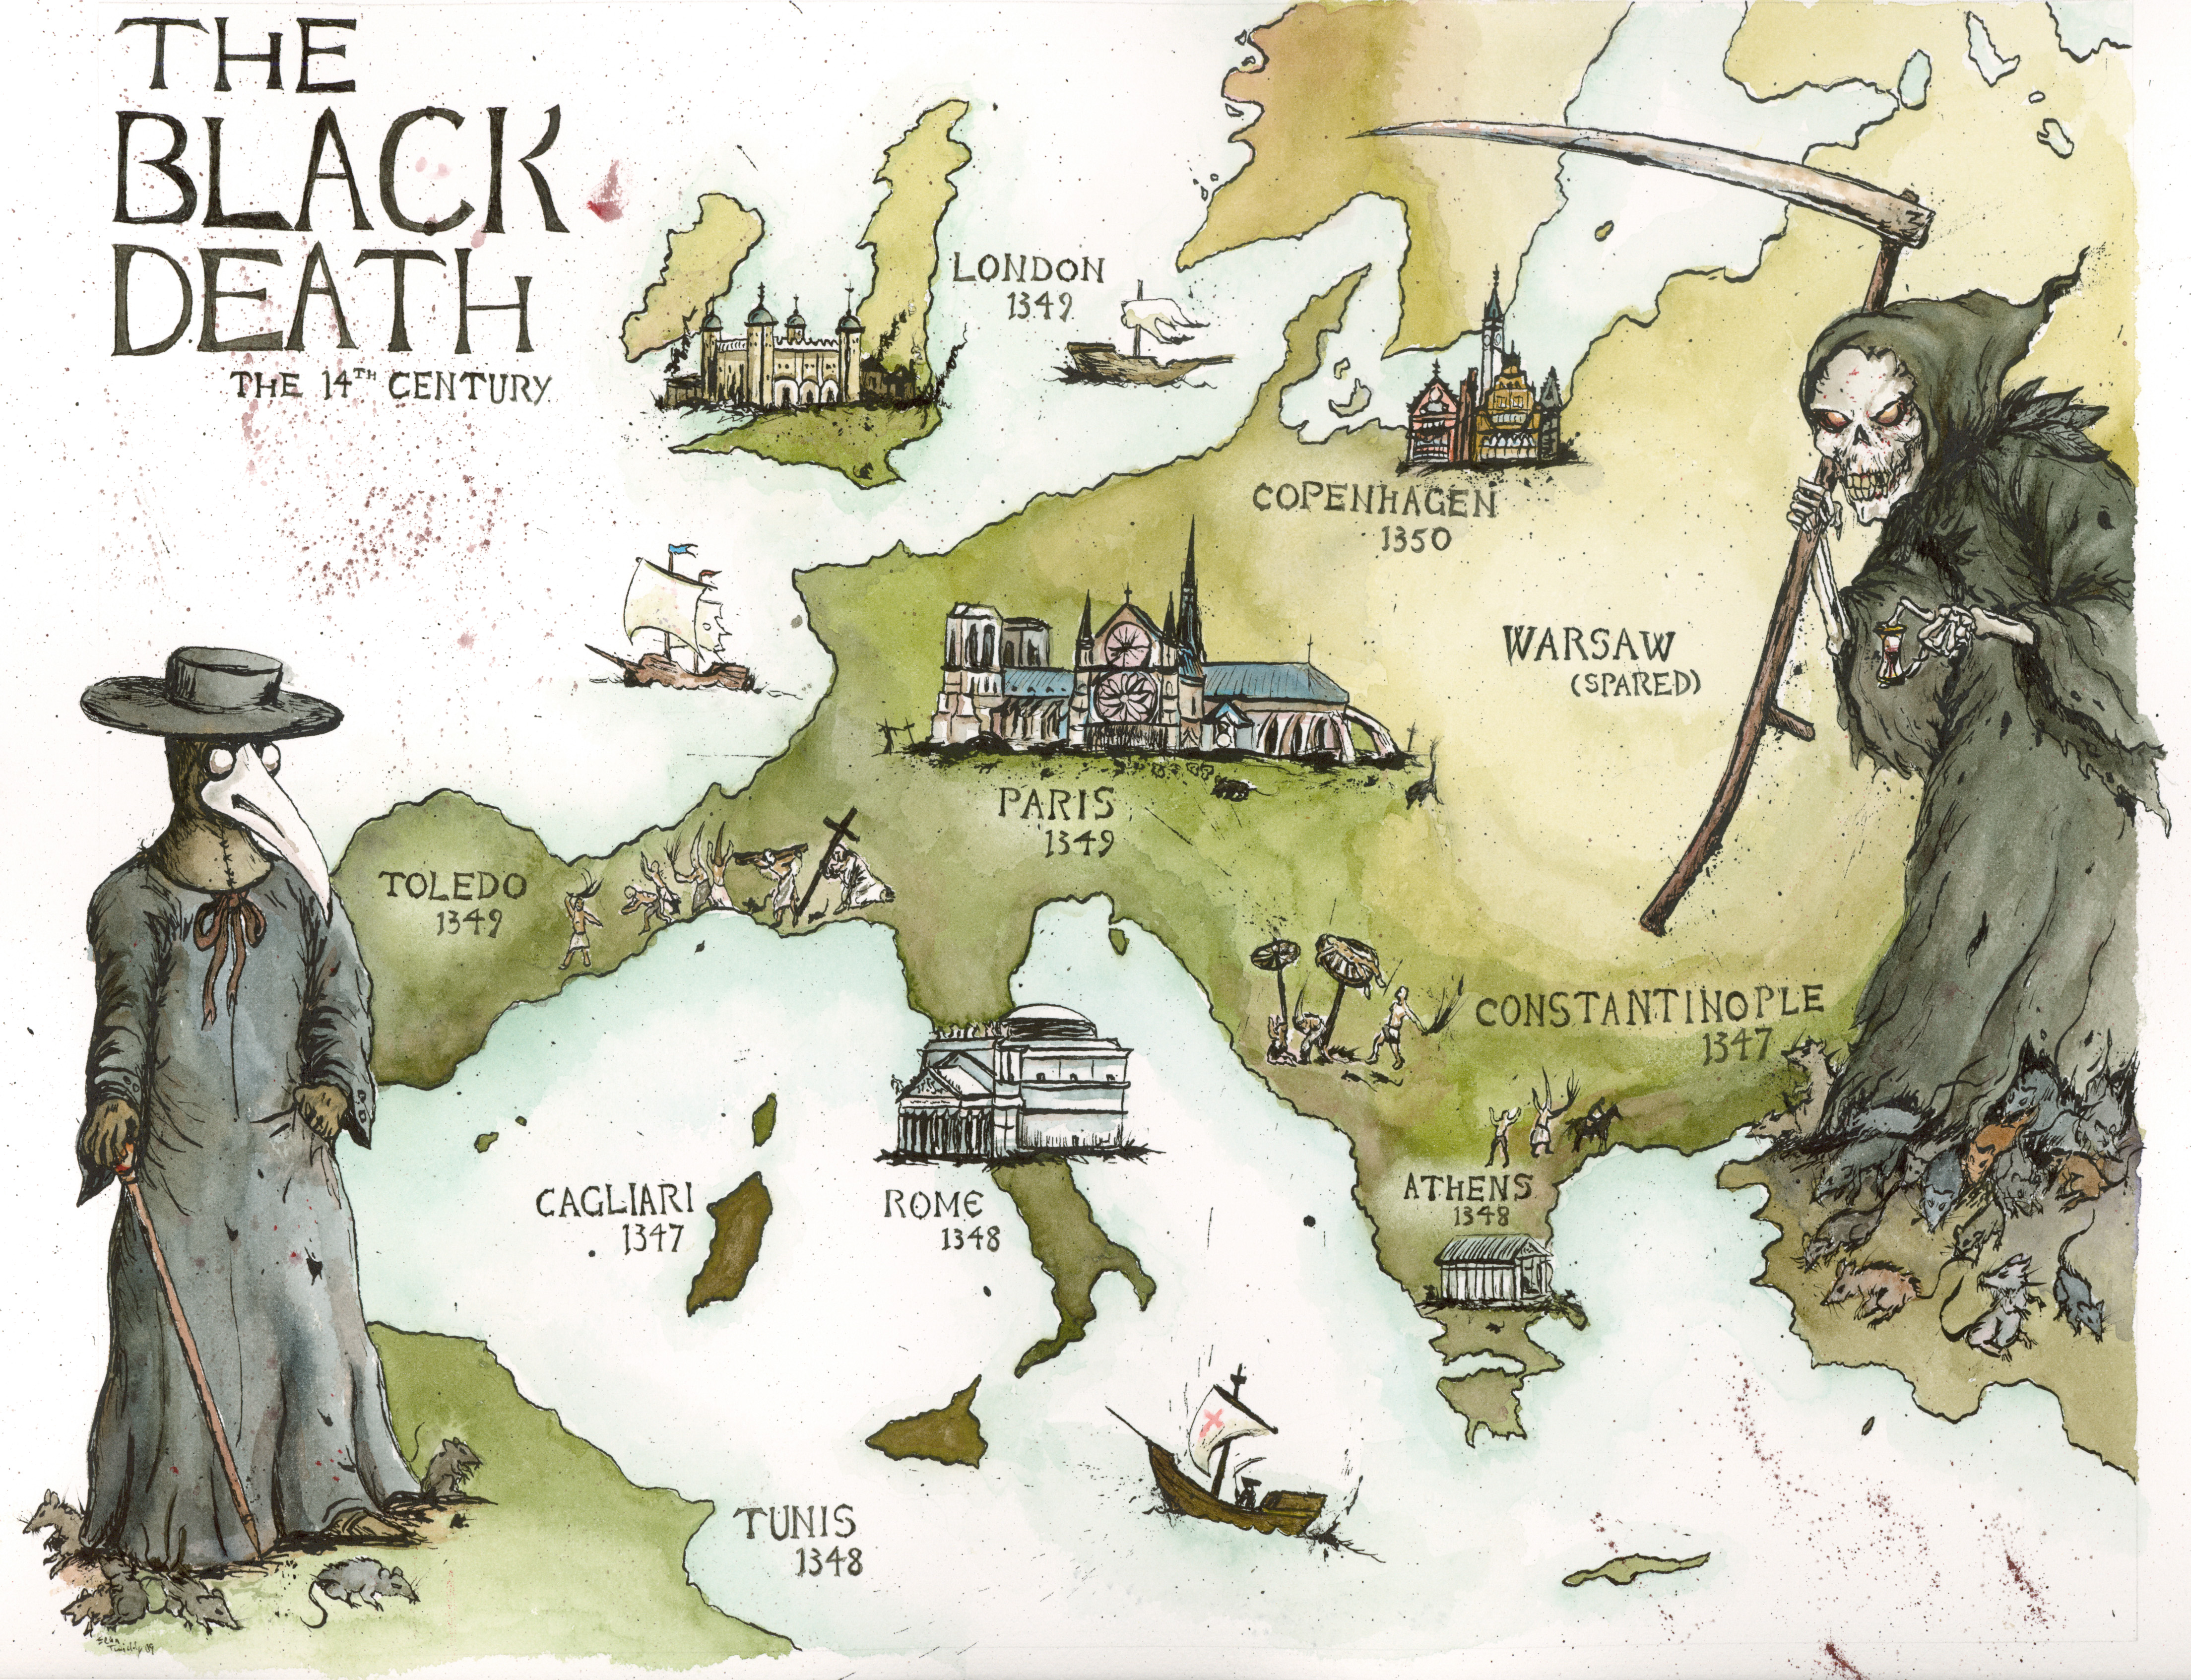 The Black Death: The 14th Century